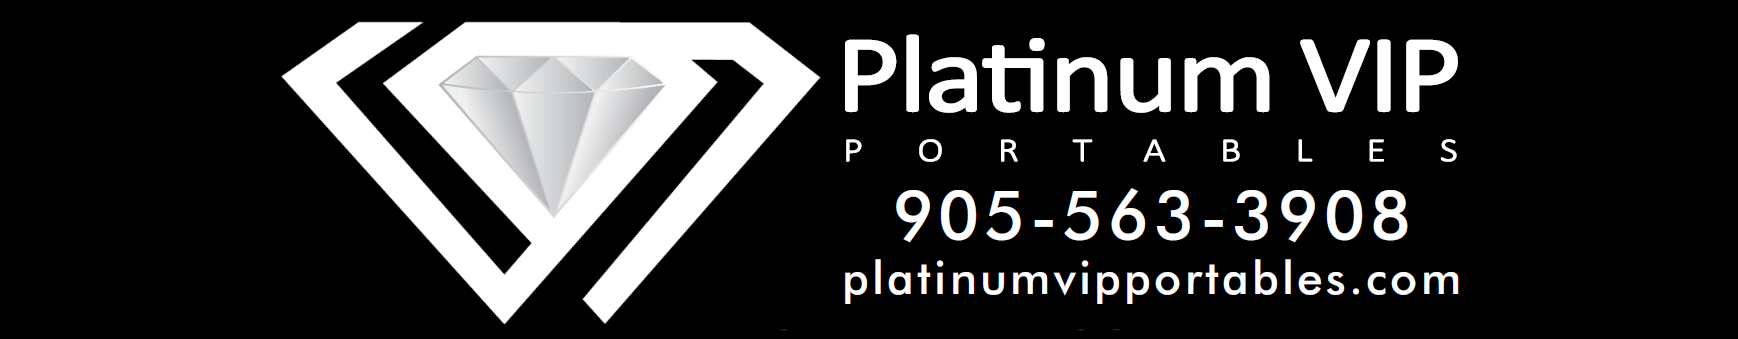 Platinum VIP Portables